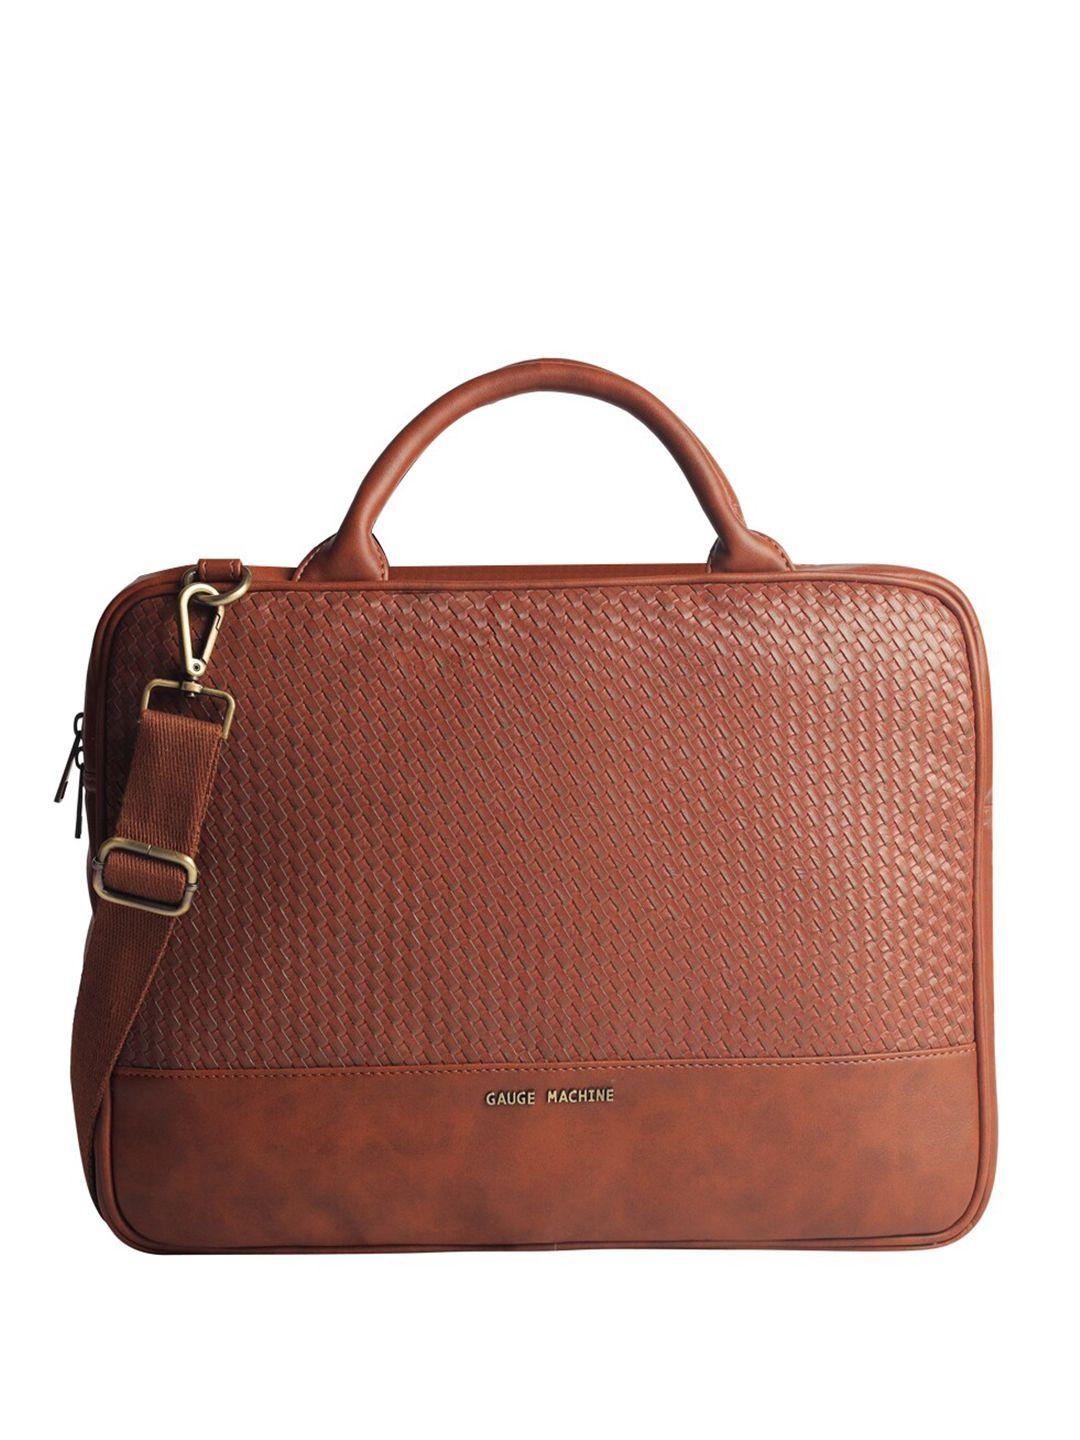 gauge machine unisex brown leather laptop bag